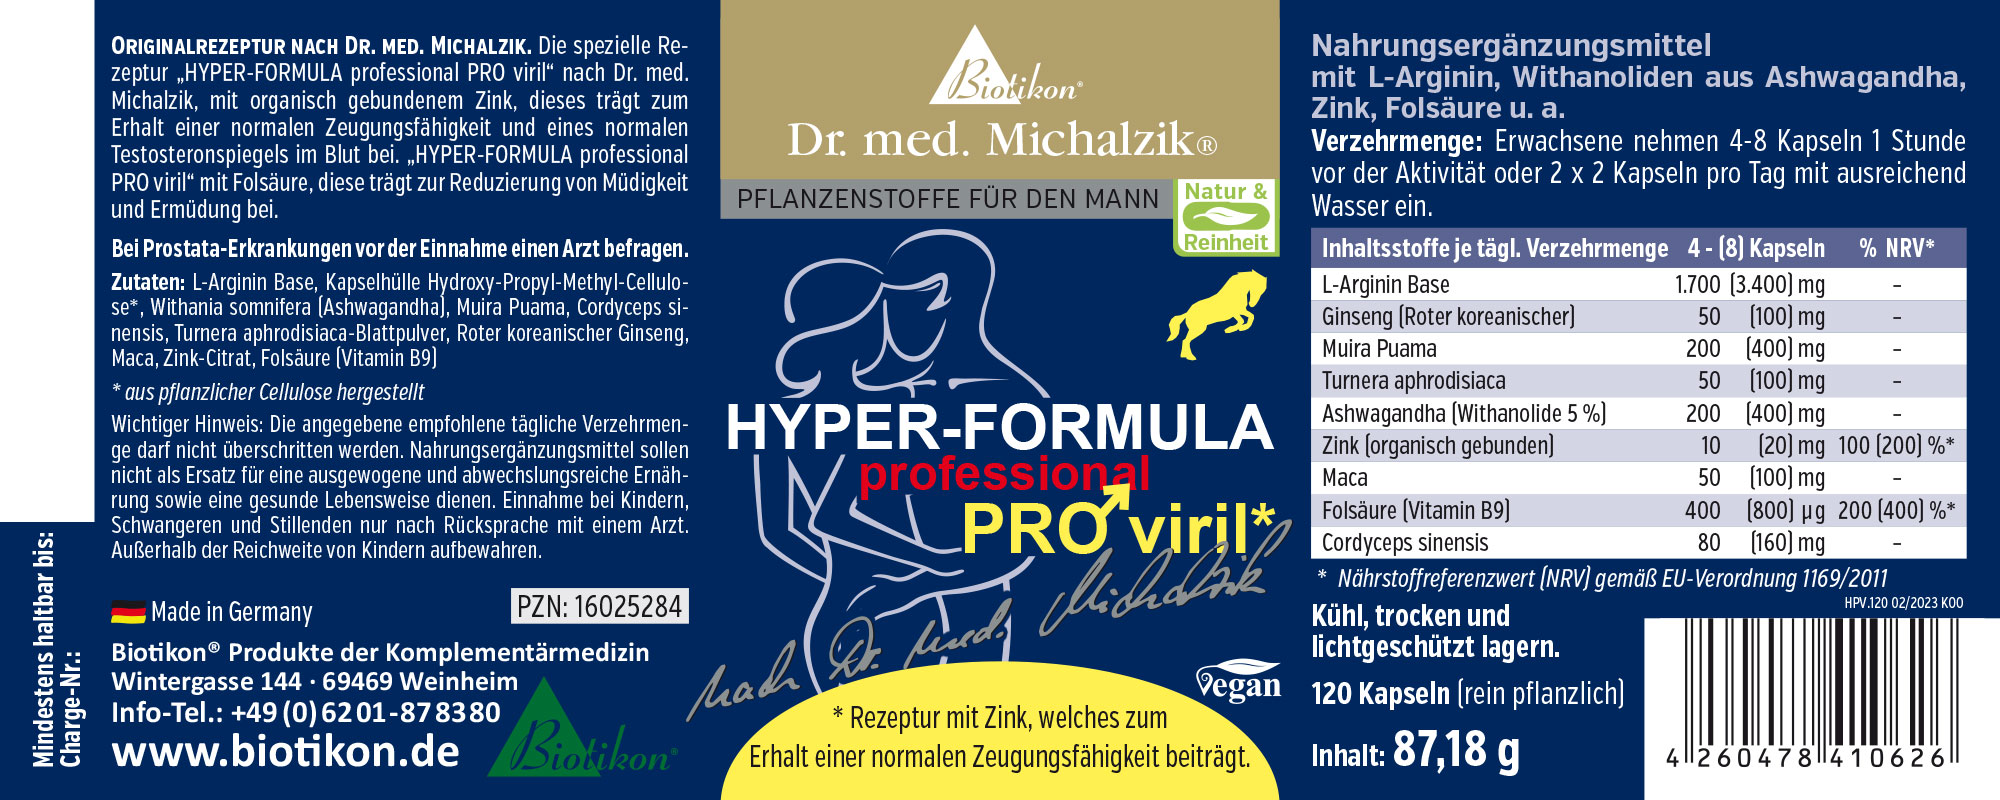 Hyper-Formula professional PRO viril